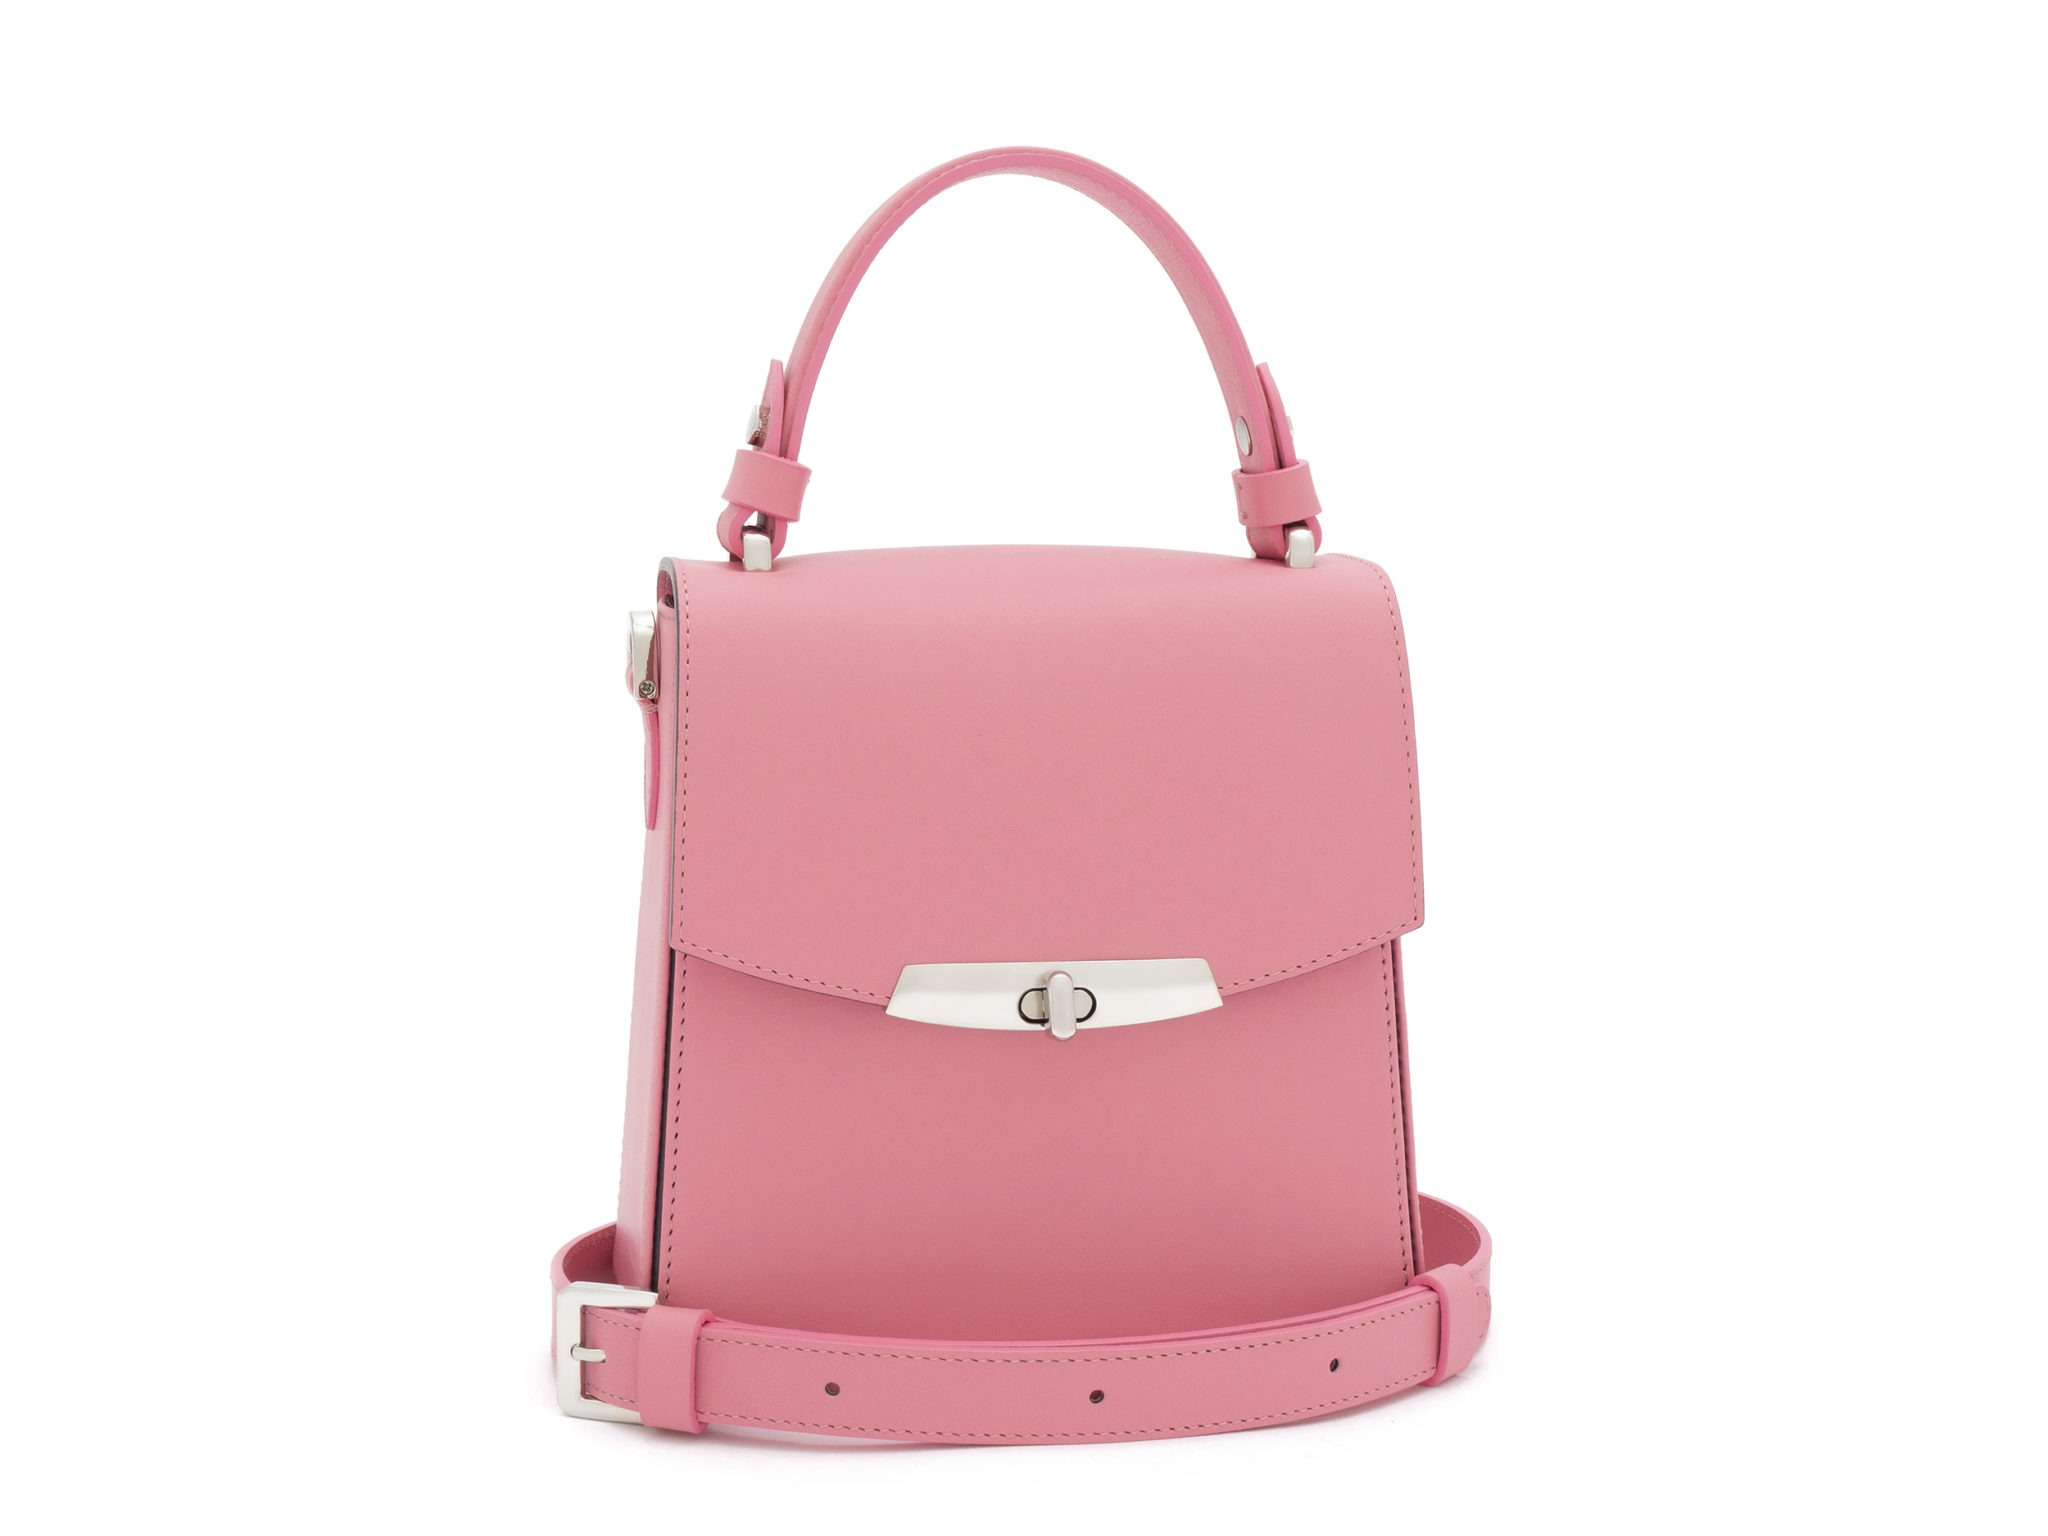 Re q pink. Сумка модель Грейс. Bag Grace Ling. Сумка Galaday gd4952q-Pink.